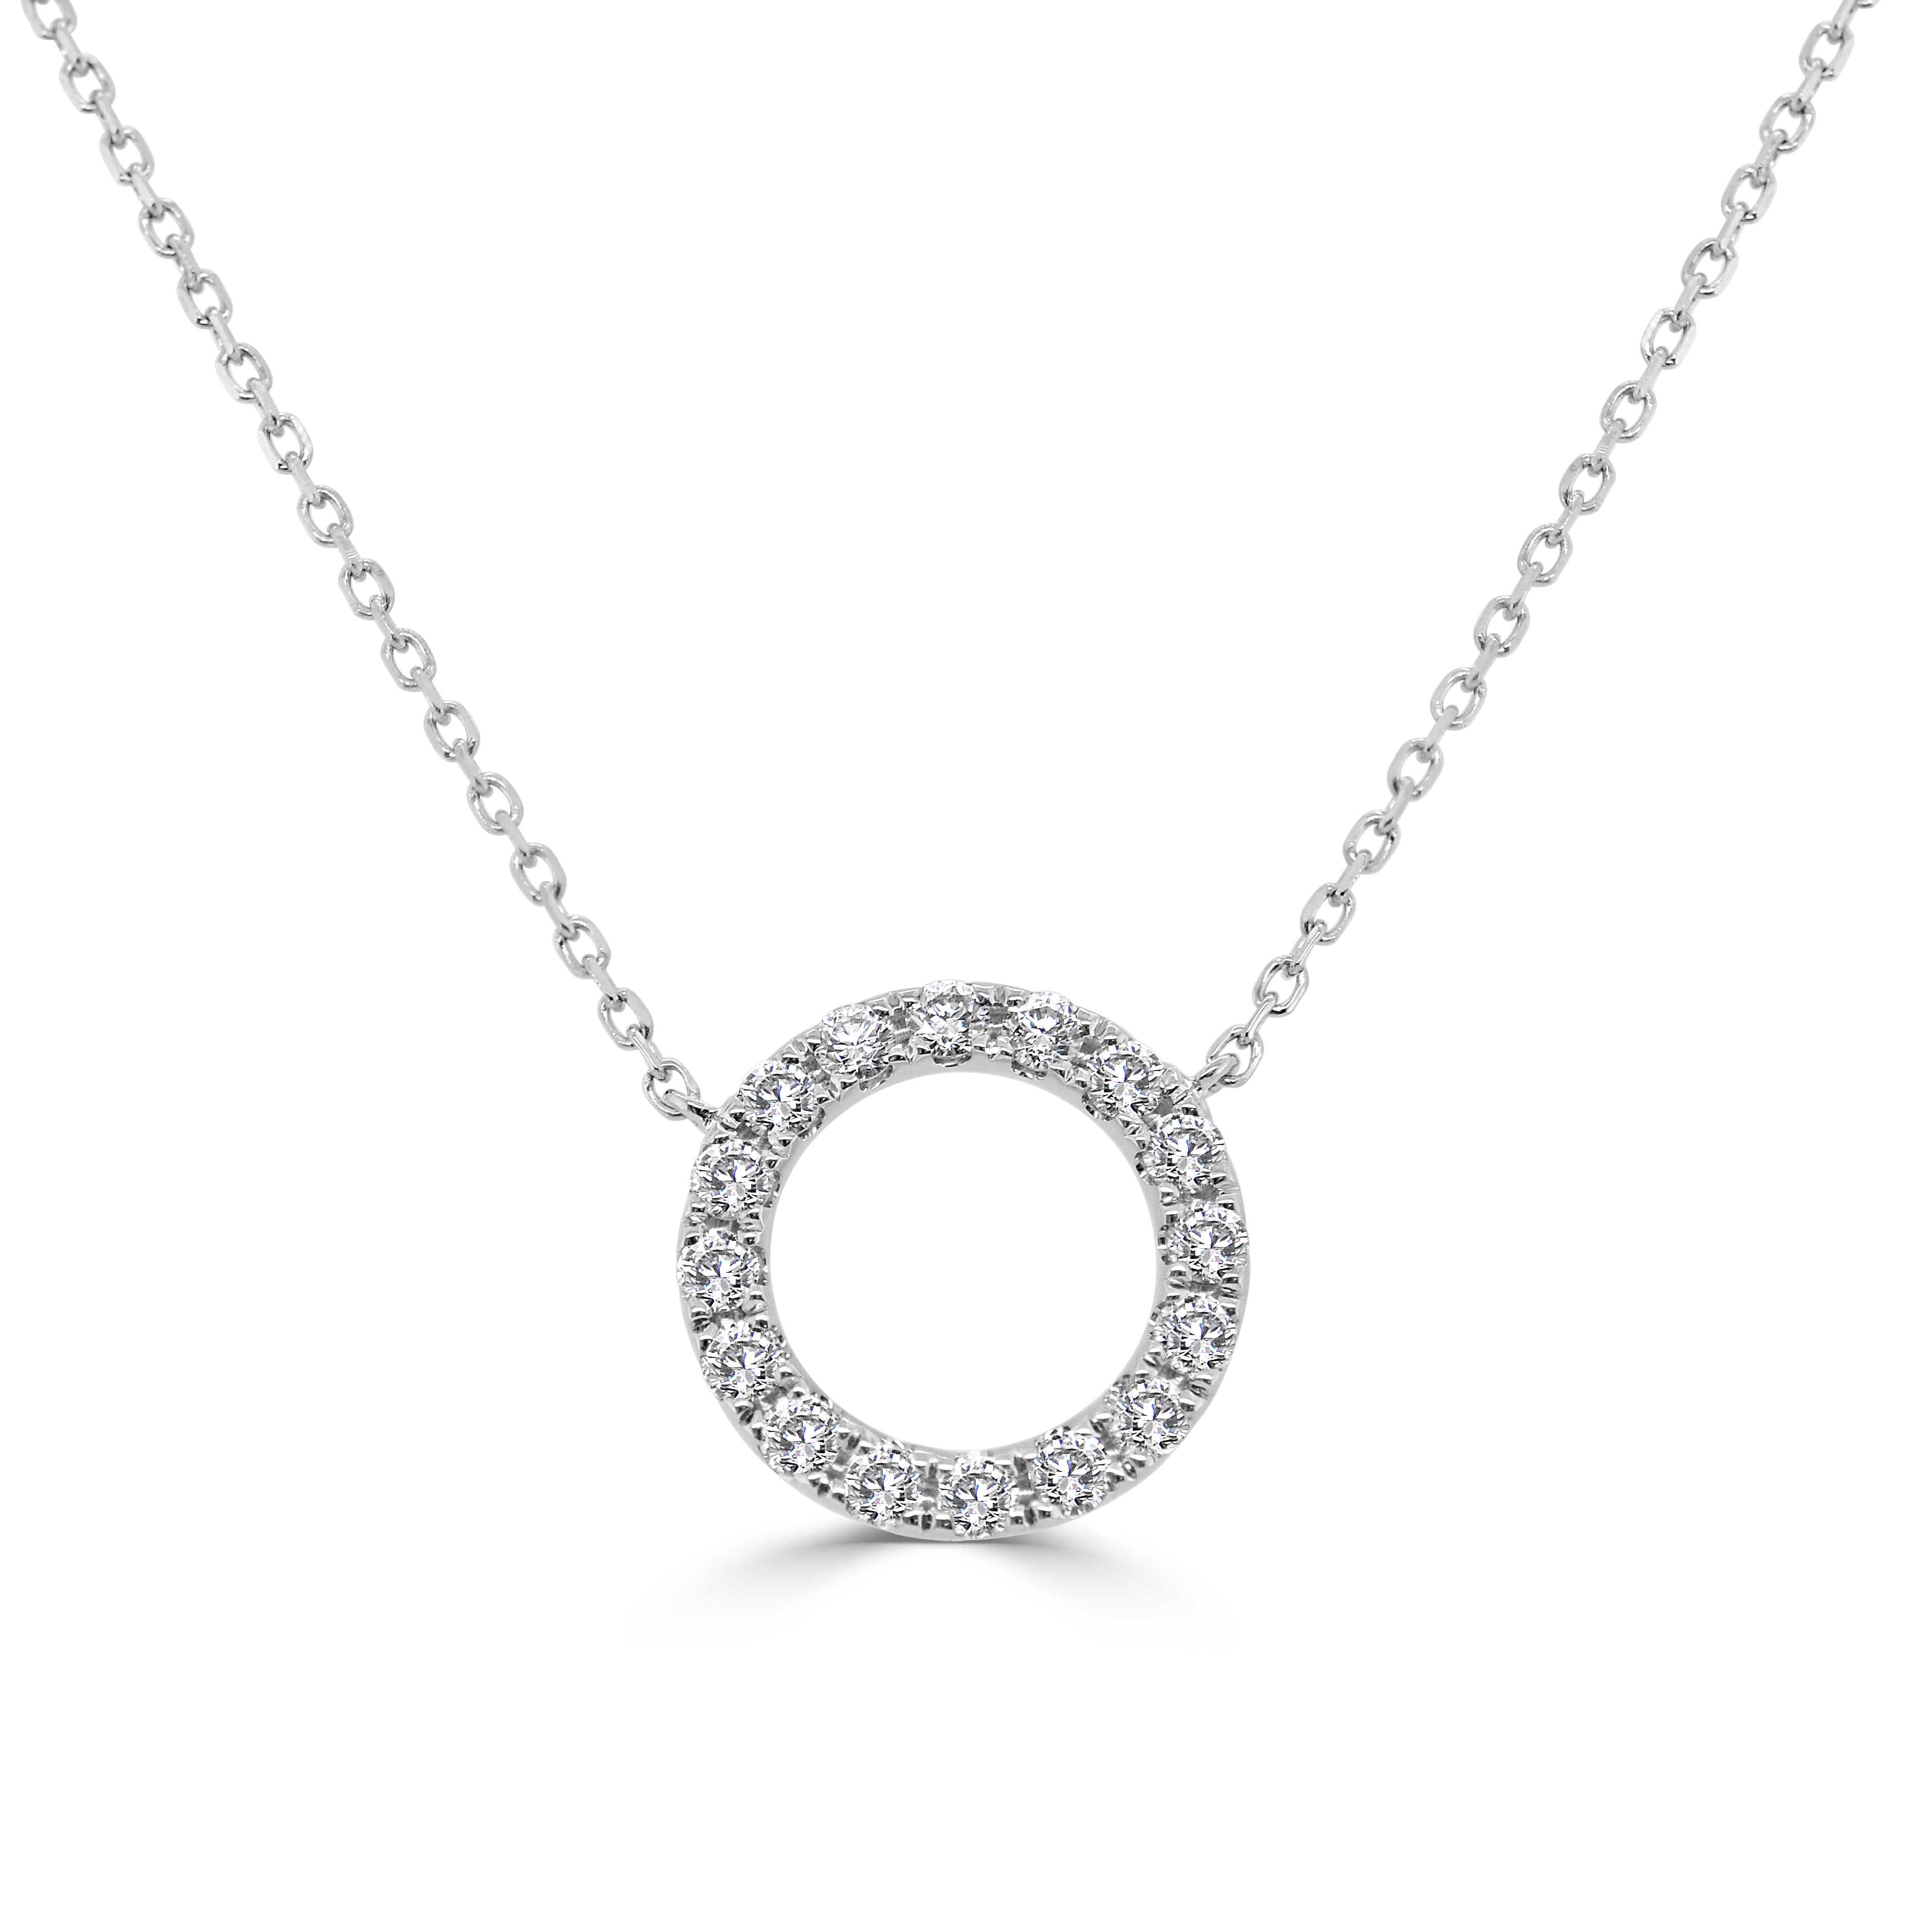 14k Gold & Diamond Open Circle Necklace - 0.58ct